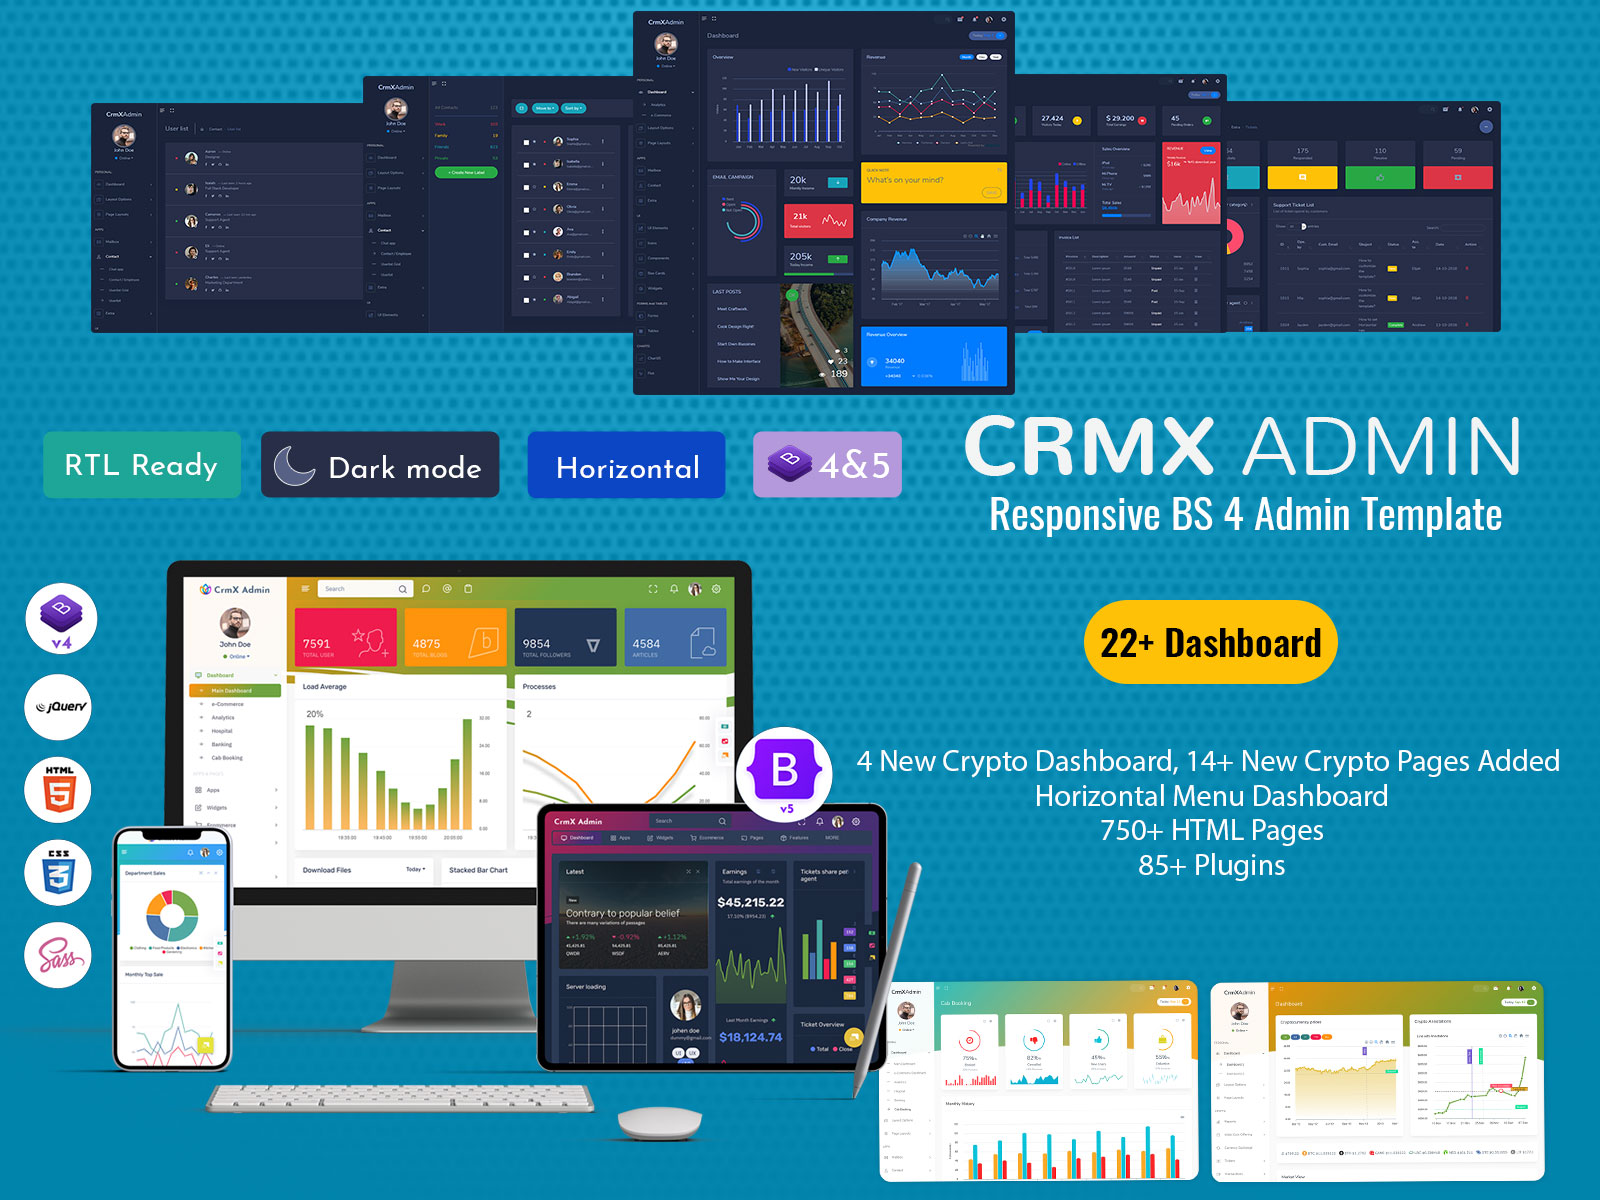 CrmX - Admin Dashboard Template